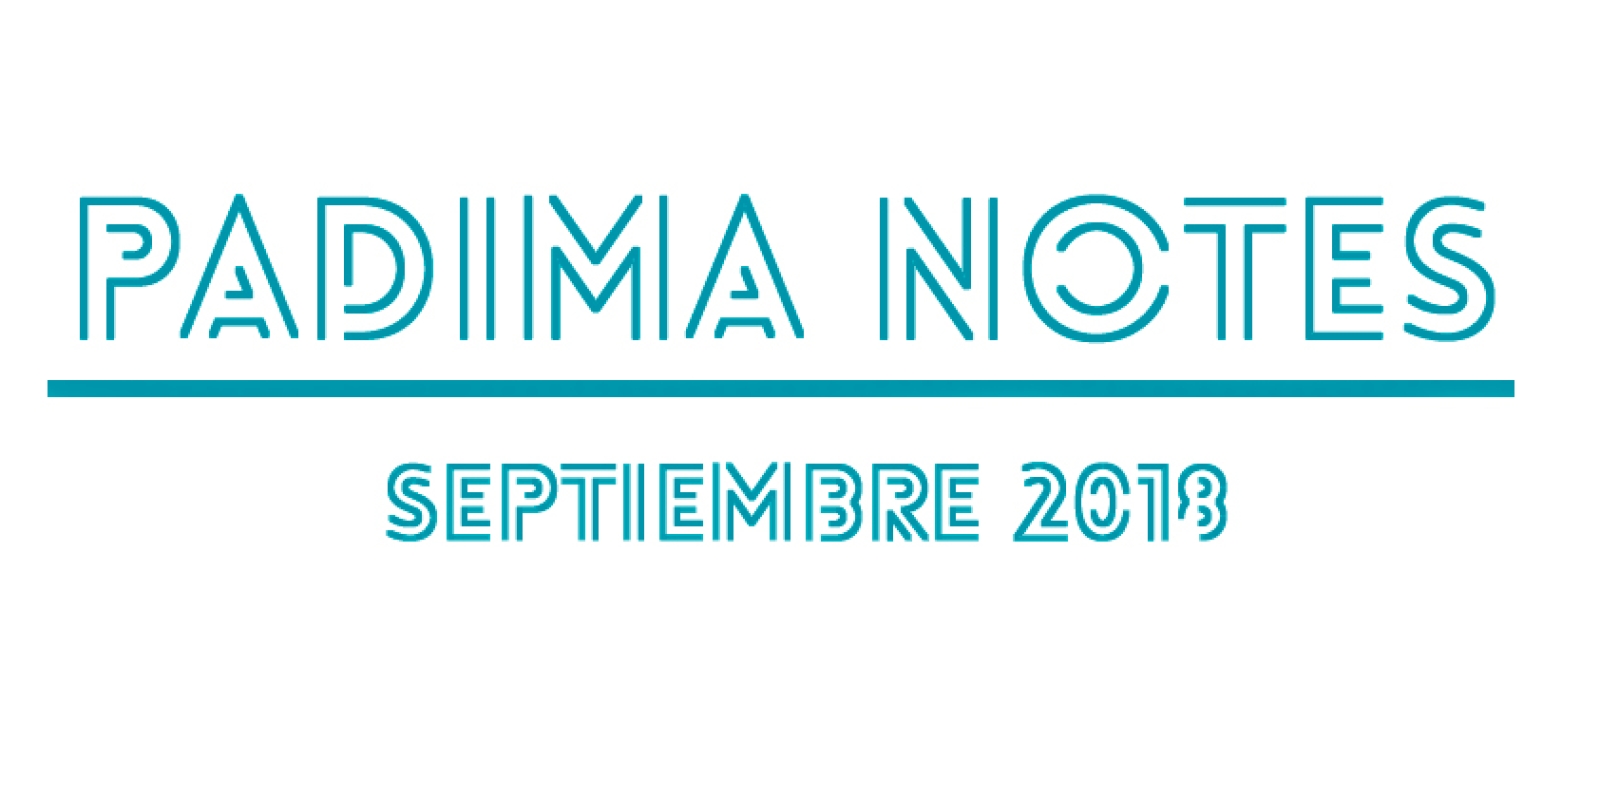 Padima Notes Septiembre 2018